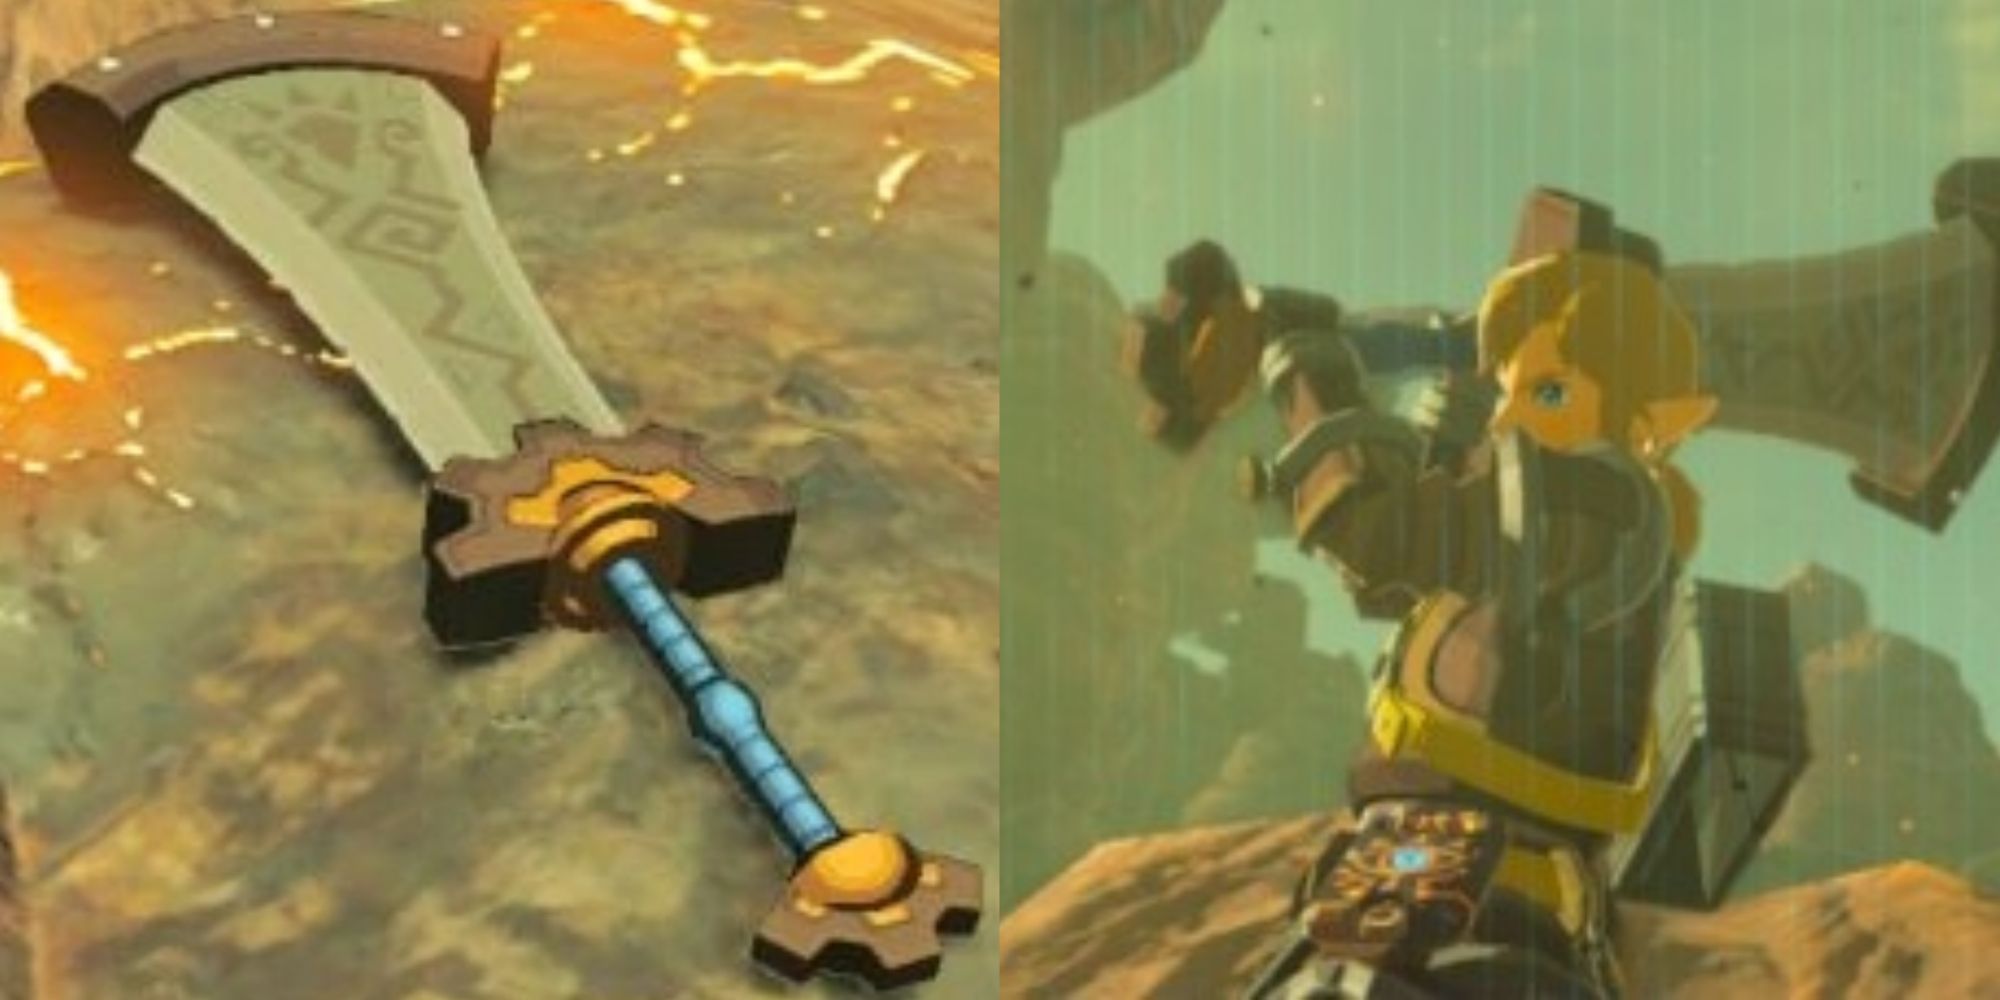 Split image screenshots of the Boulder Breaker on the ground and Link wielding the Boulder Breaker.